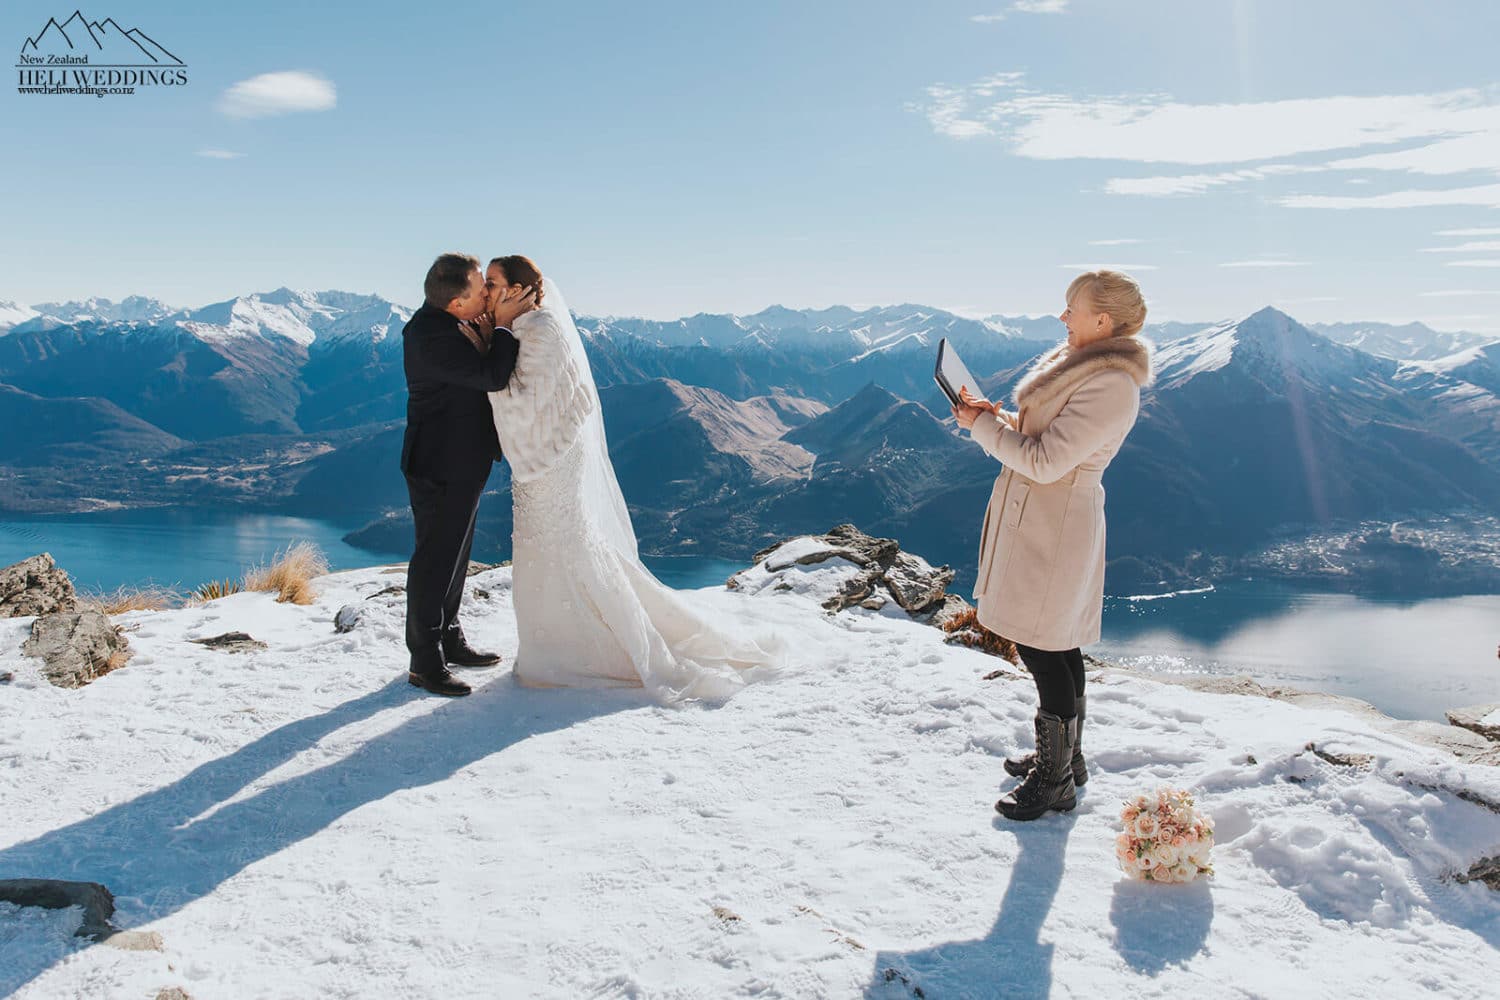 Winter wedding ceremony in the snow